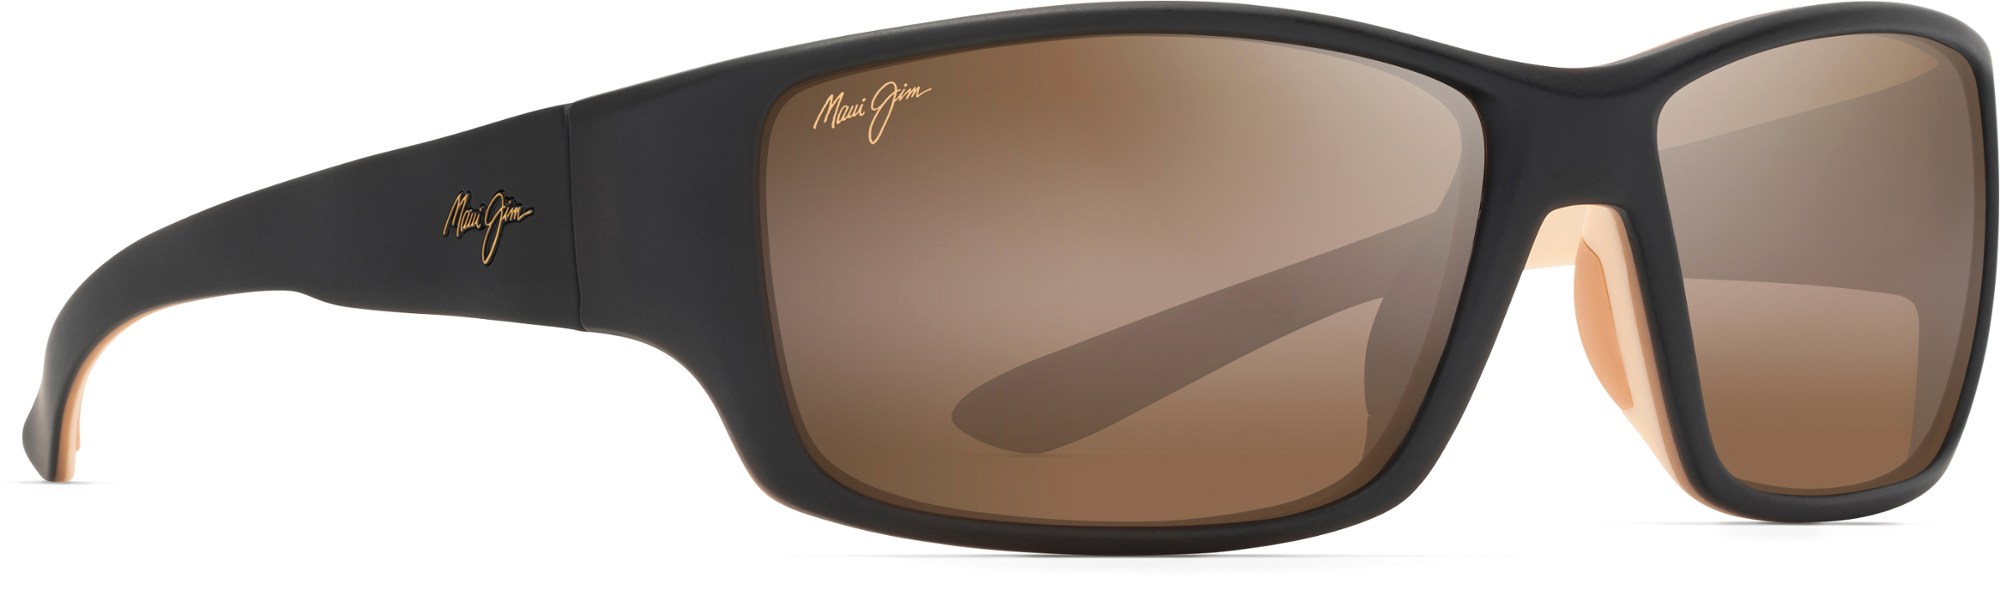 Поляризованные солнцезащитные очки Local Kine Maui Jim, коричневый солнцезащитные очки one way maui jim цвет dark navy stripe blue hawaii